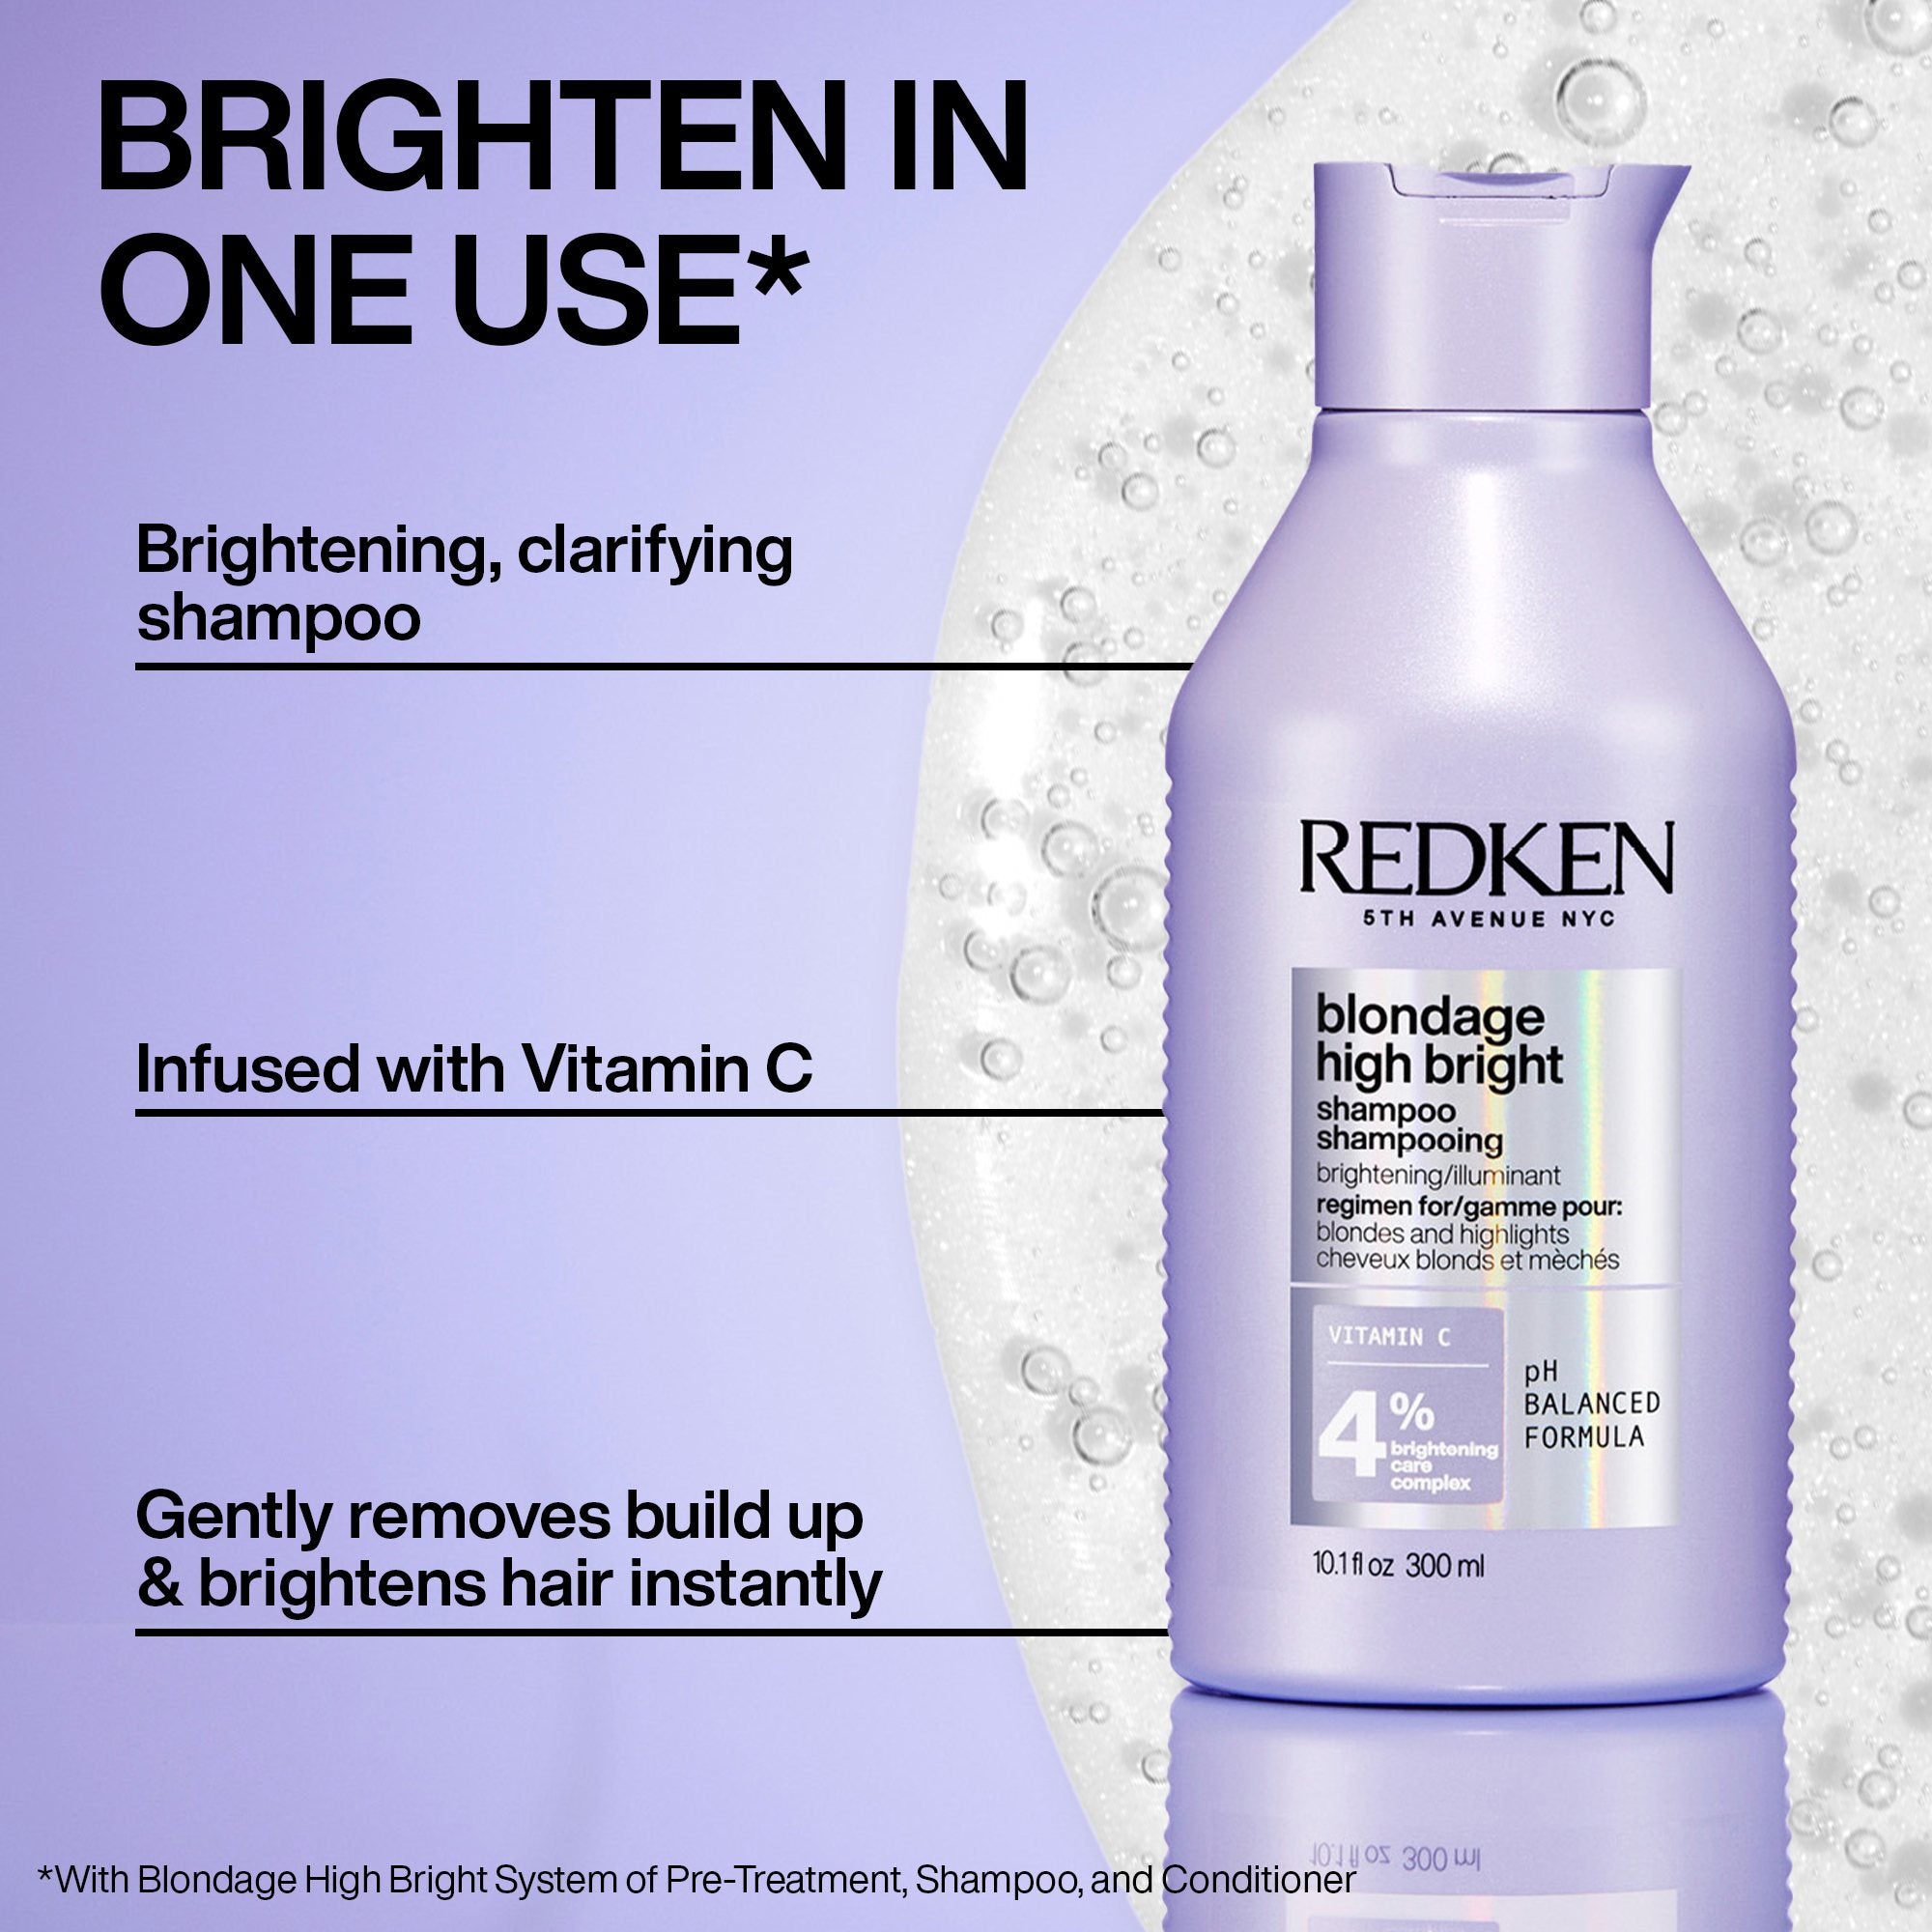 Redken Blondage High Bright Shampoo Benefits